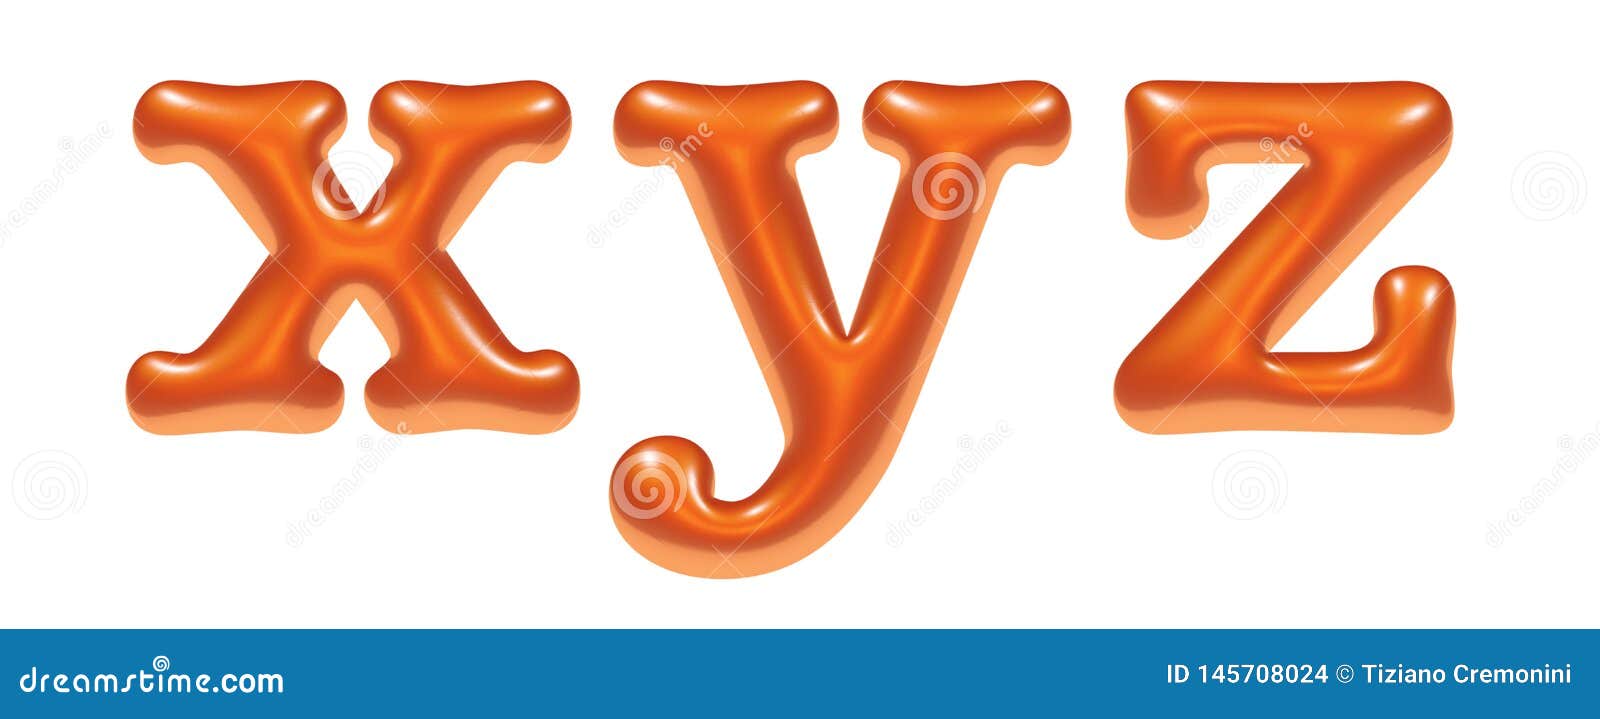 Orange Embossed Letters Alphabet Letters X Y Z 3d Illustration Stock